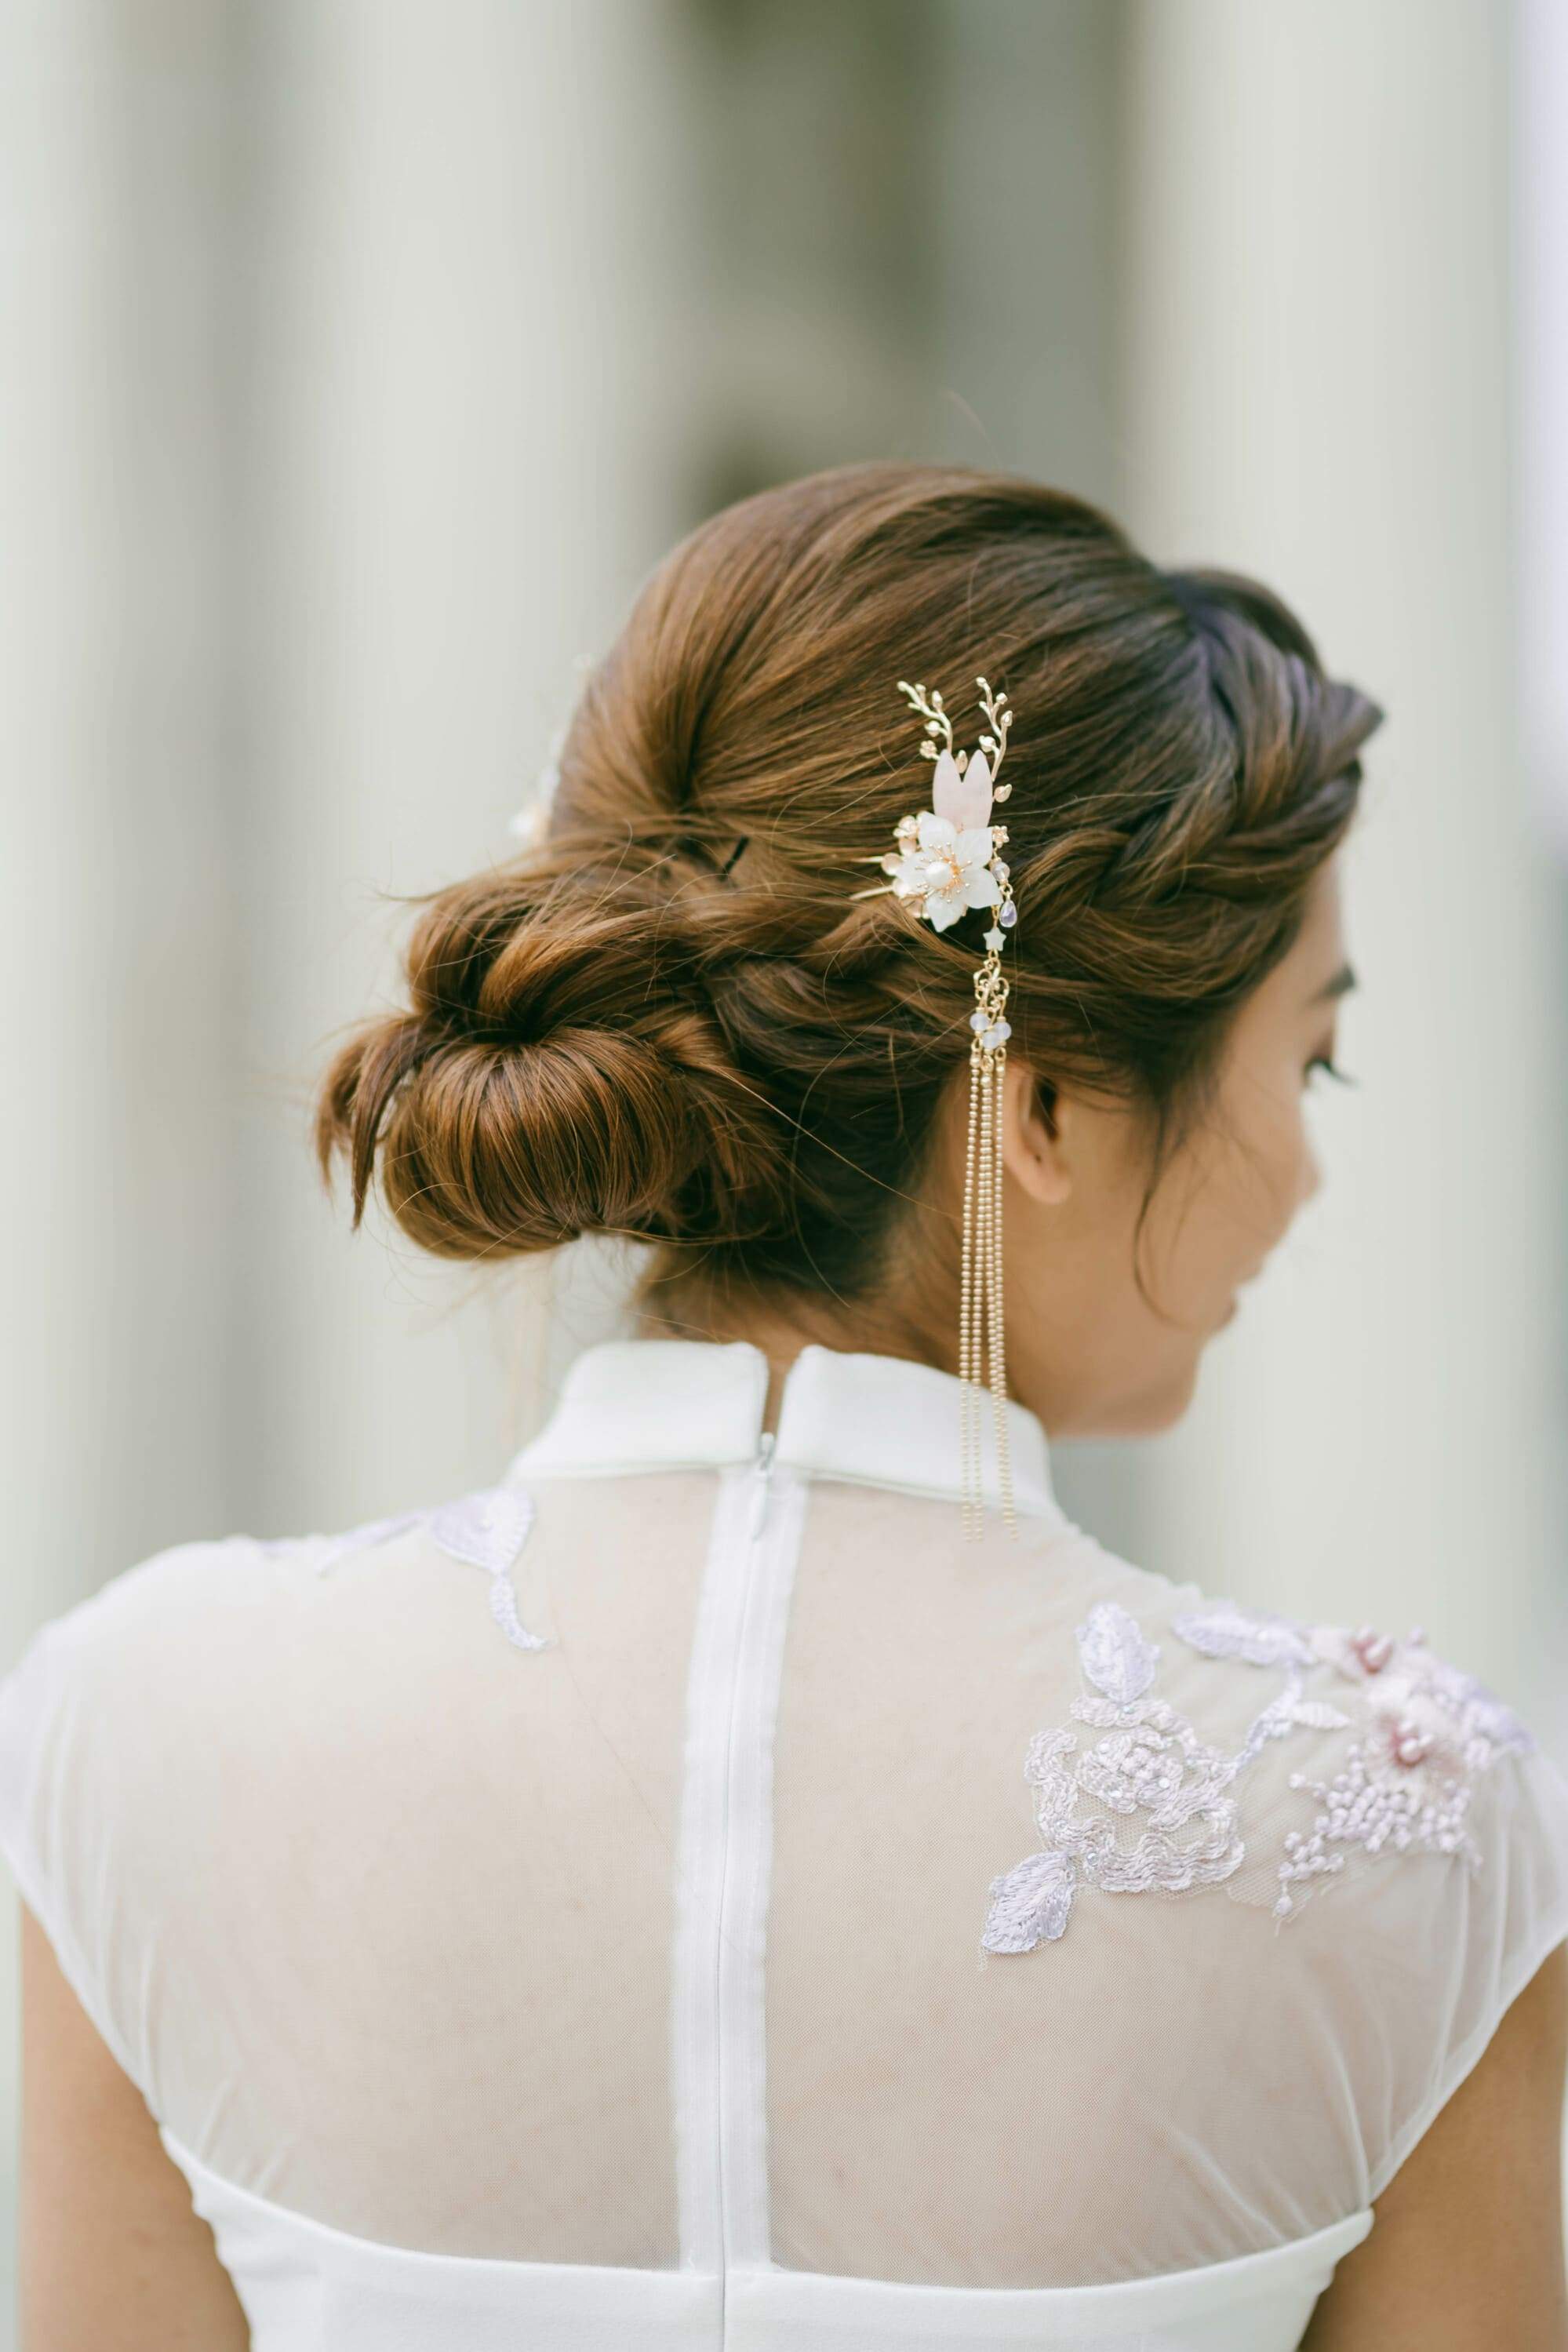 Pin on Wedding dress